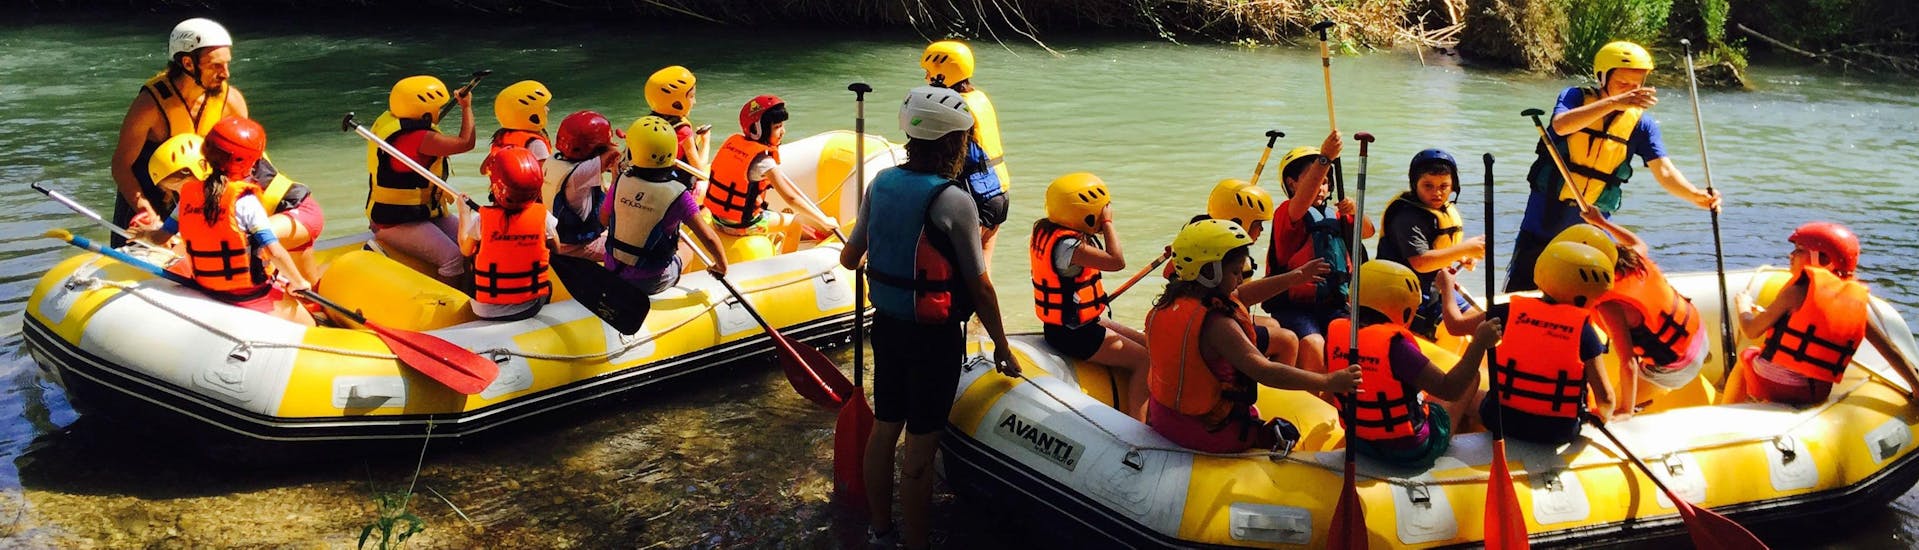 Rafting "Family & Friends" - Río Turia .